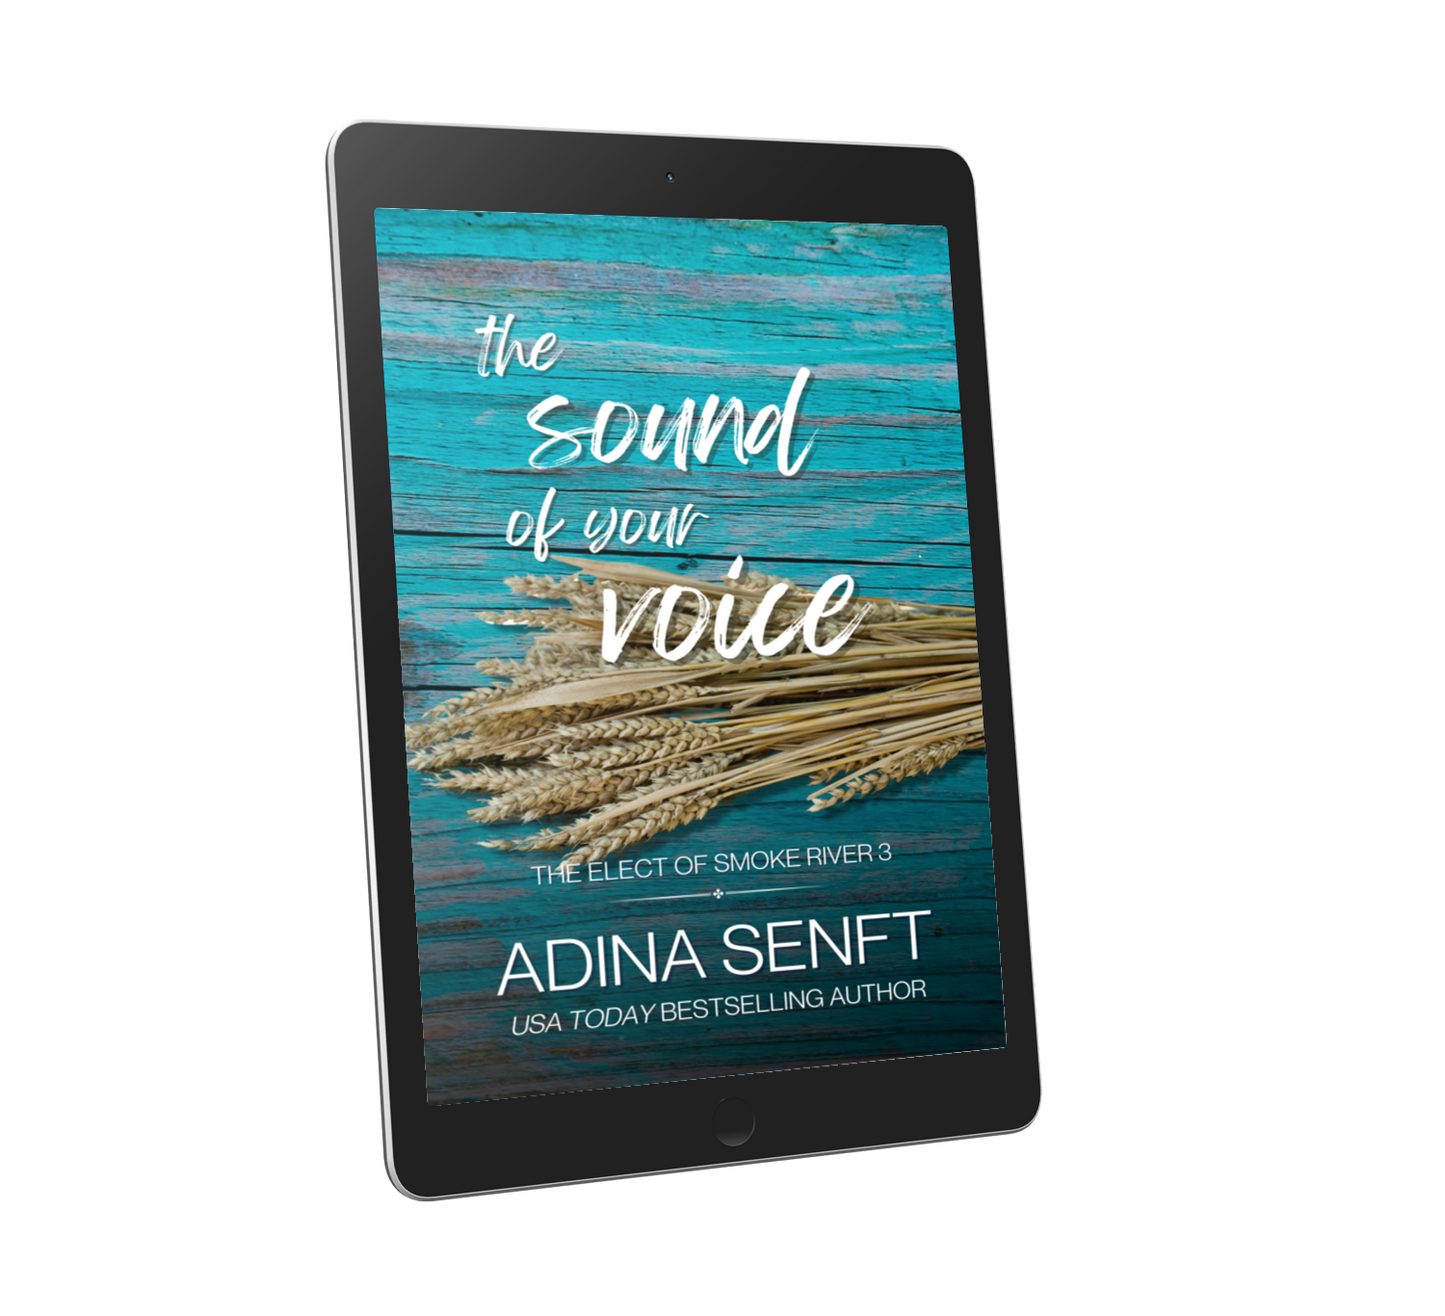 The Sound of Your Voice, a domestic suspense novel by Adina Senft